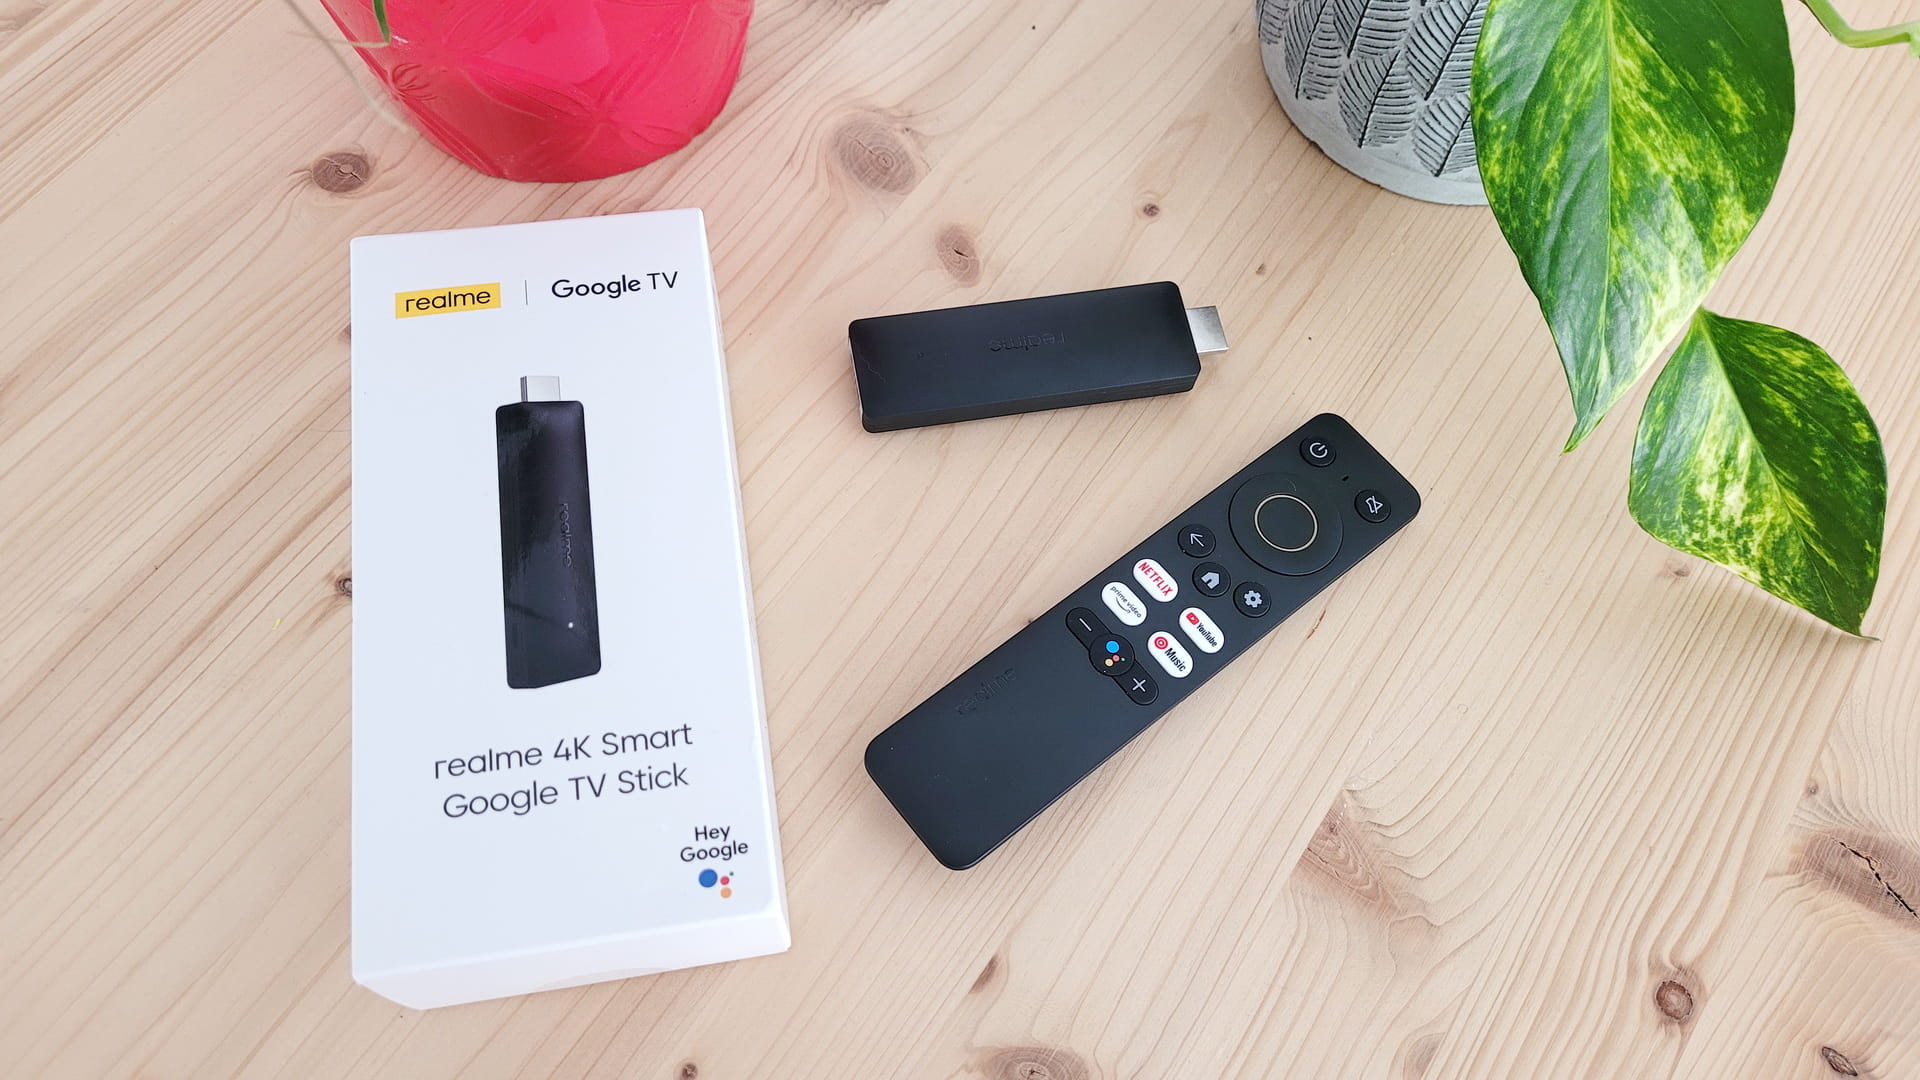 Realme 4K Smart Google TV Stick price in Bangladesh - BlackBud